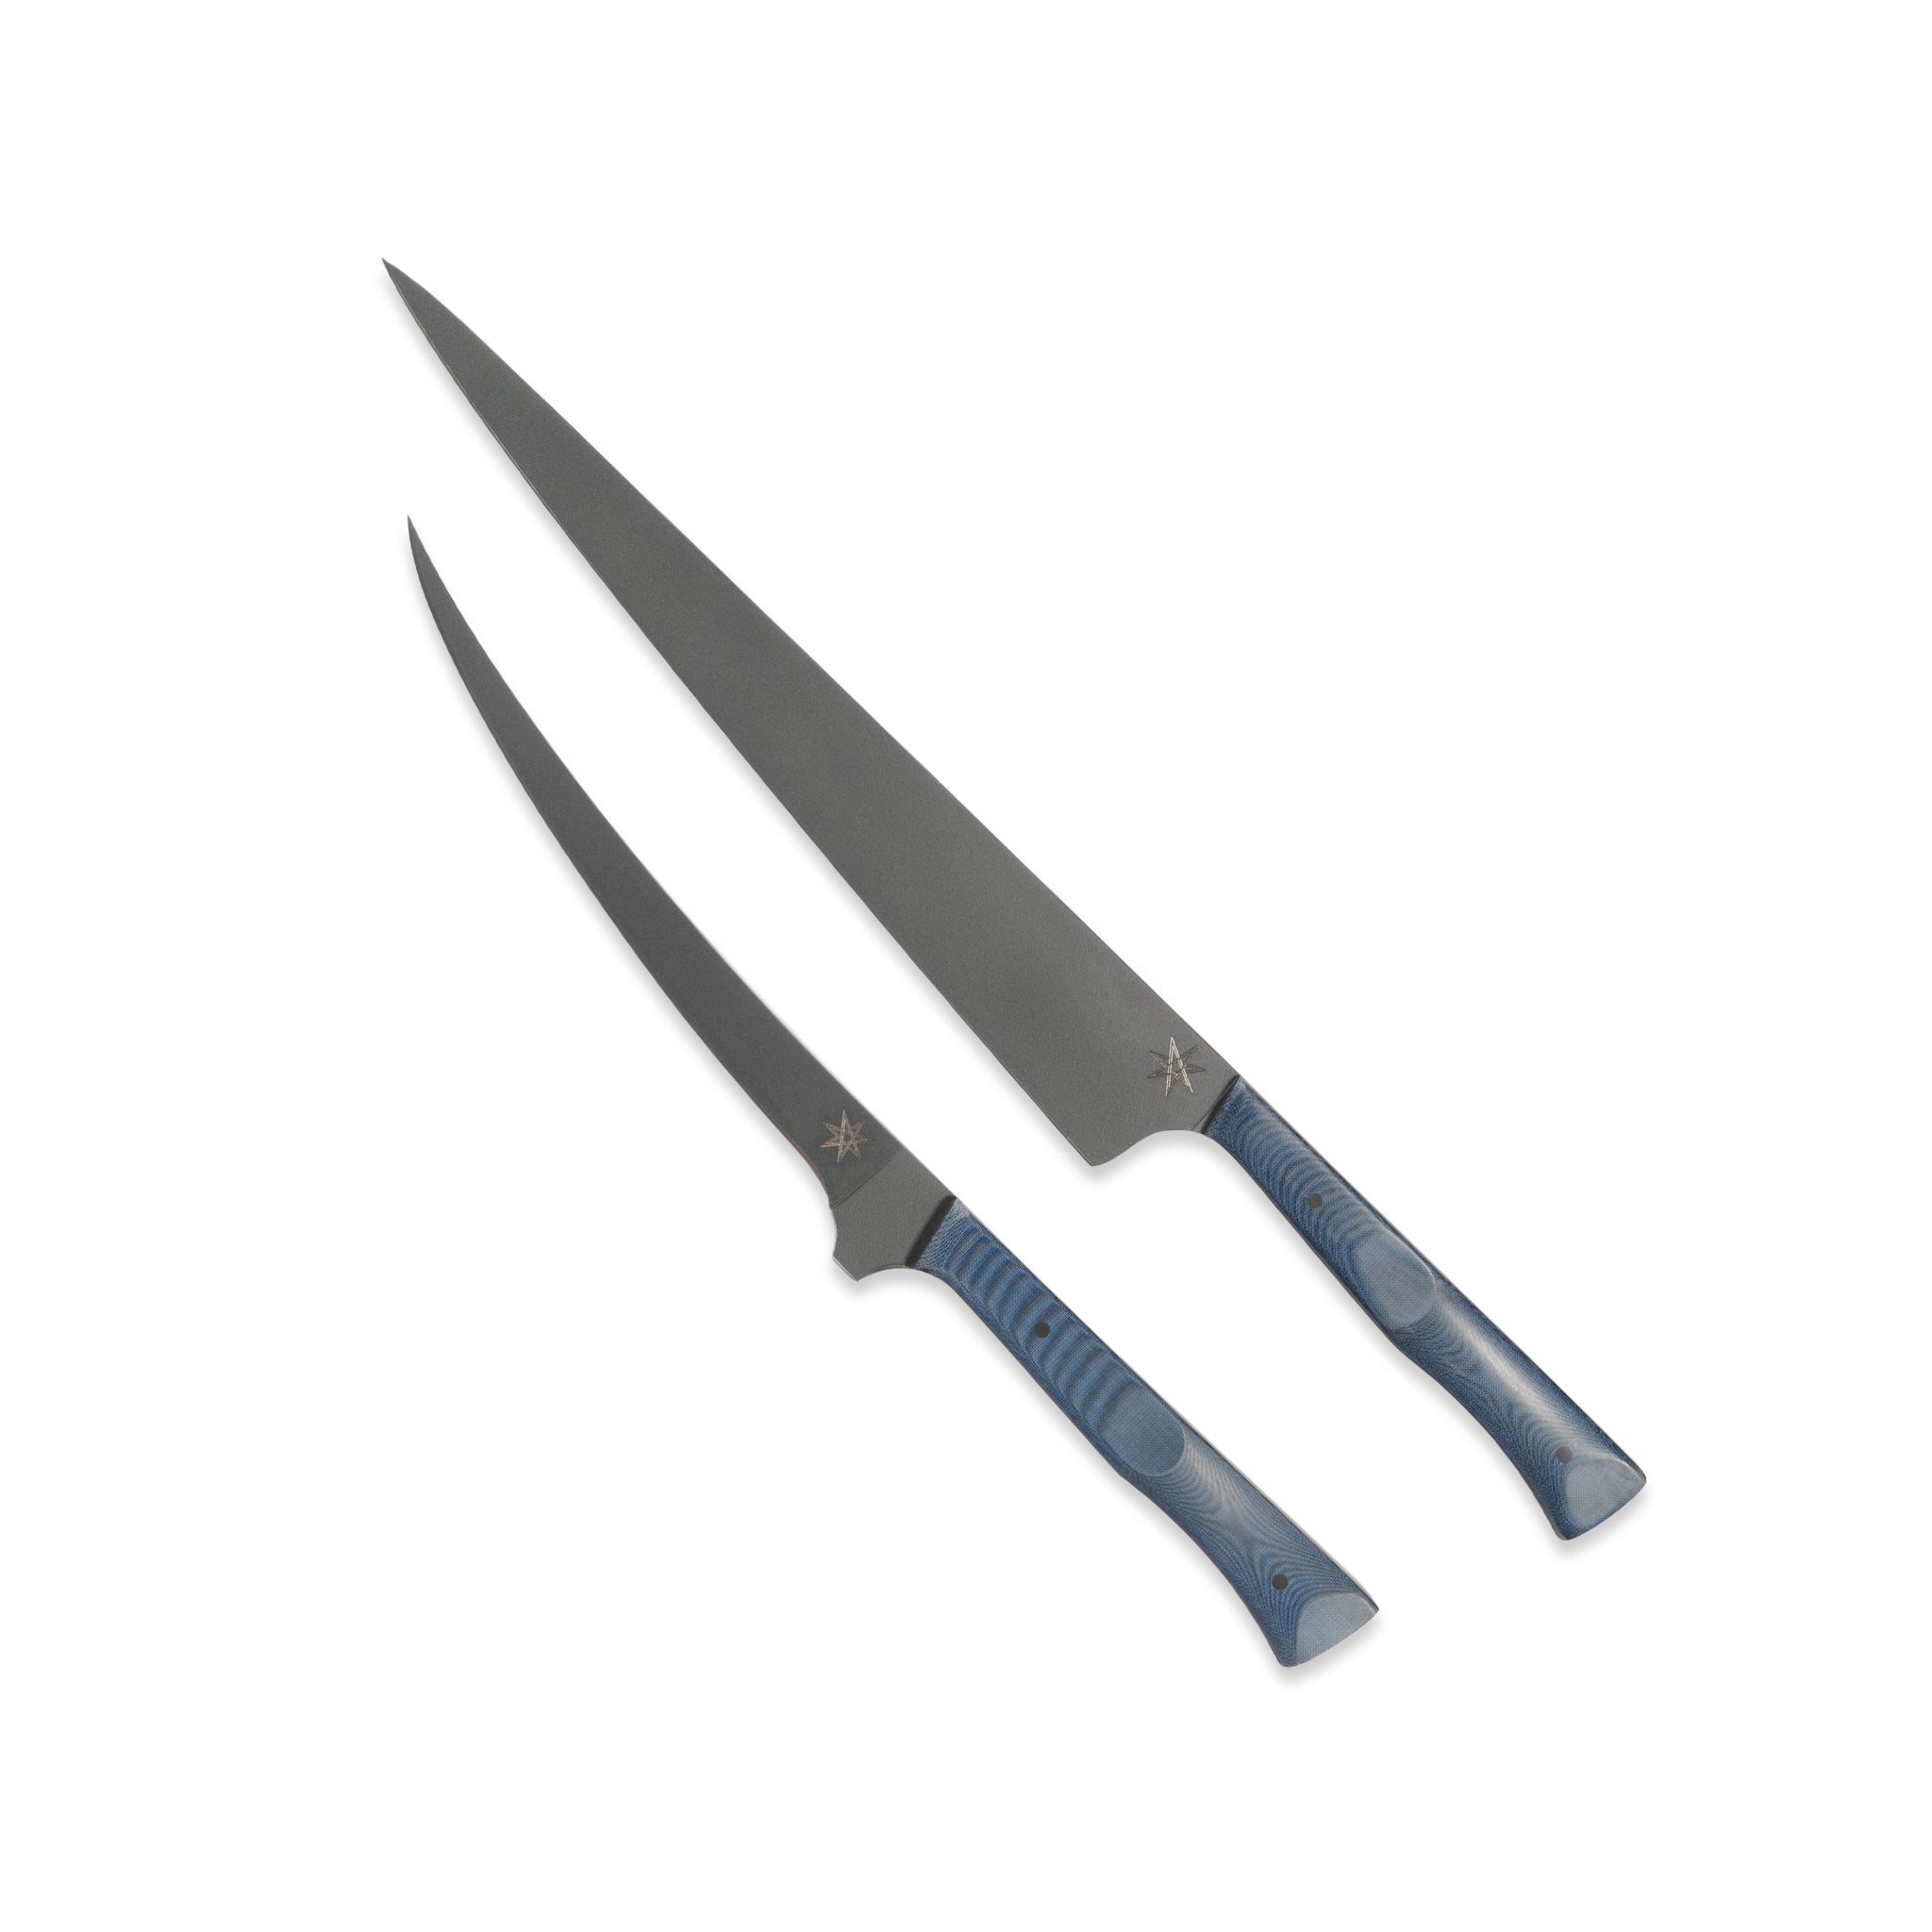 Town Cutler eXo Blue Angler Knife Set with curved boning knife and carving slicer knife.